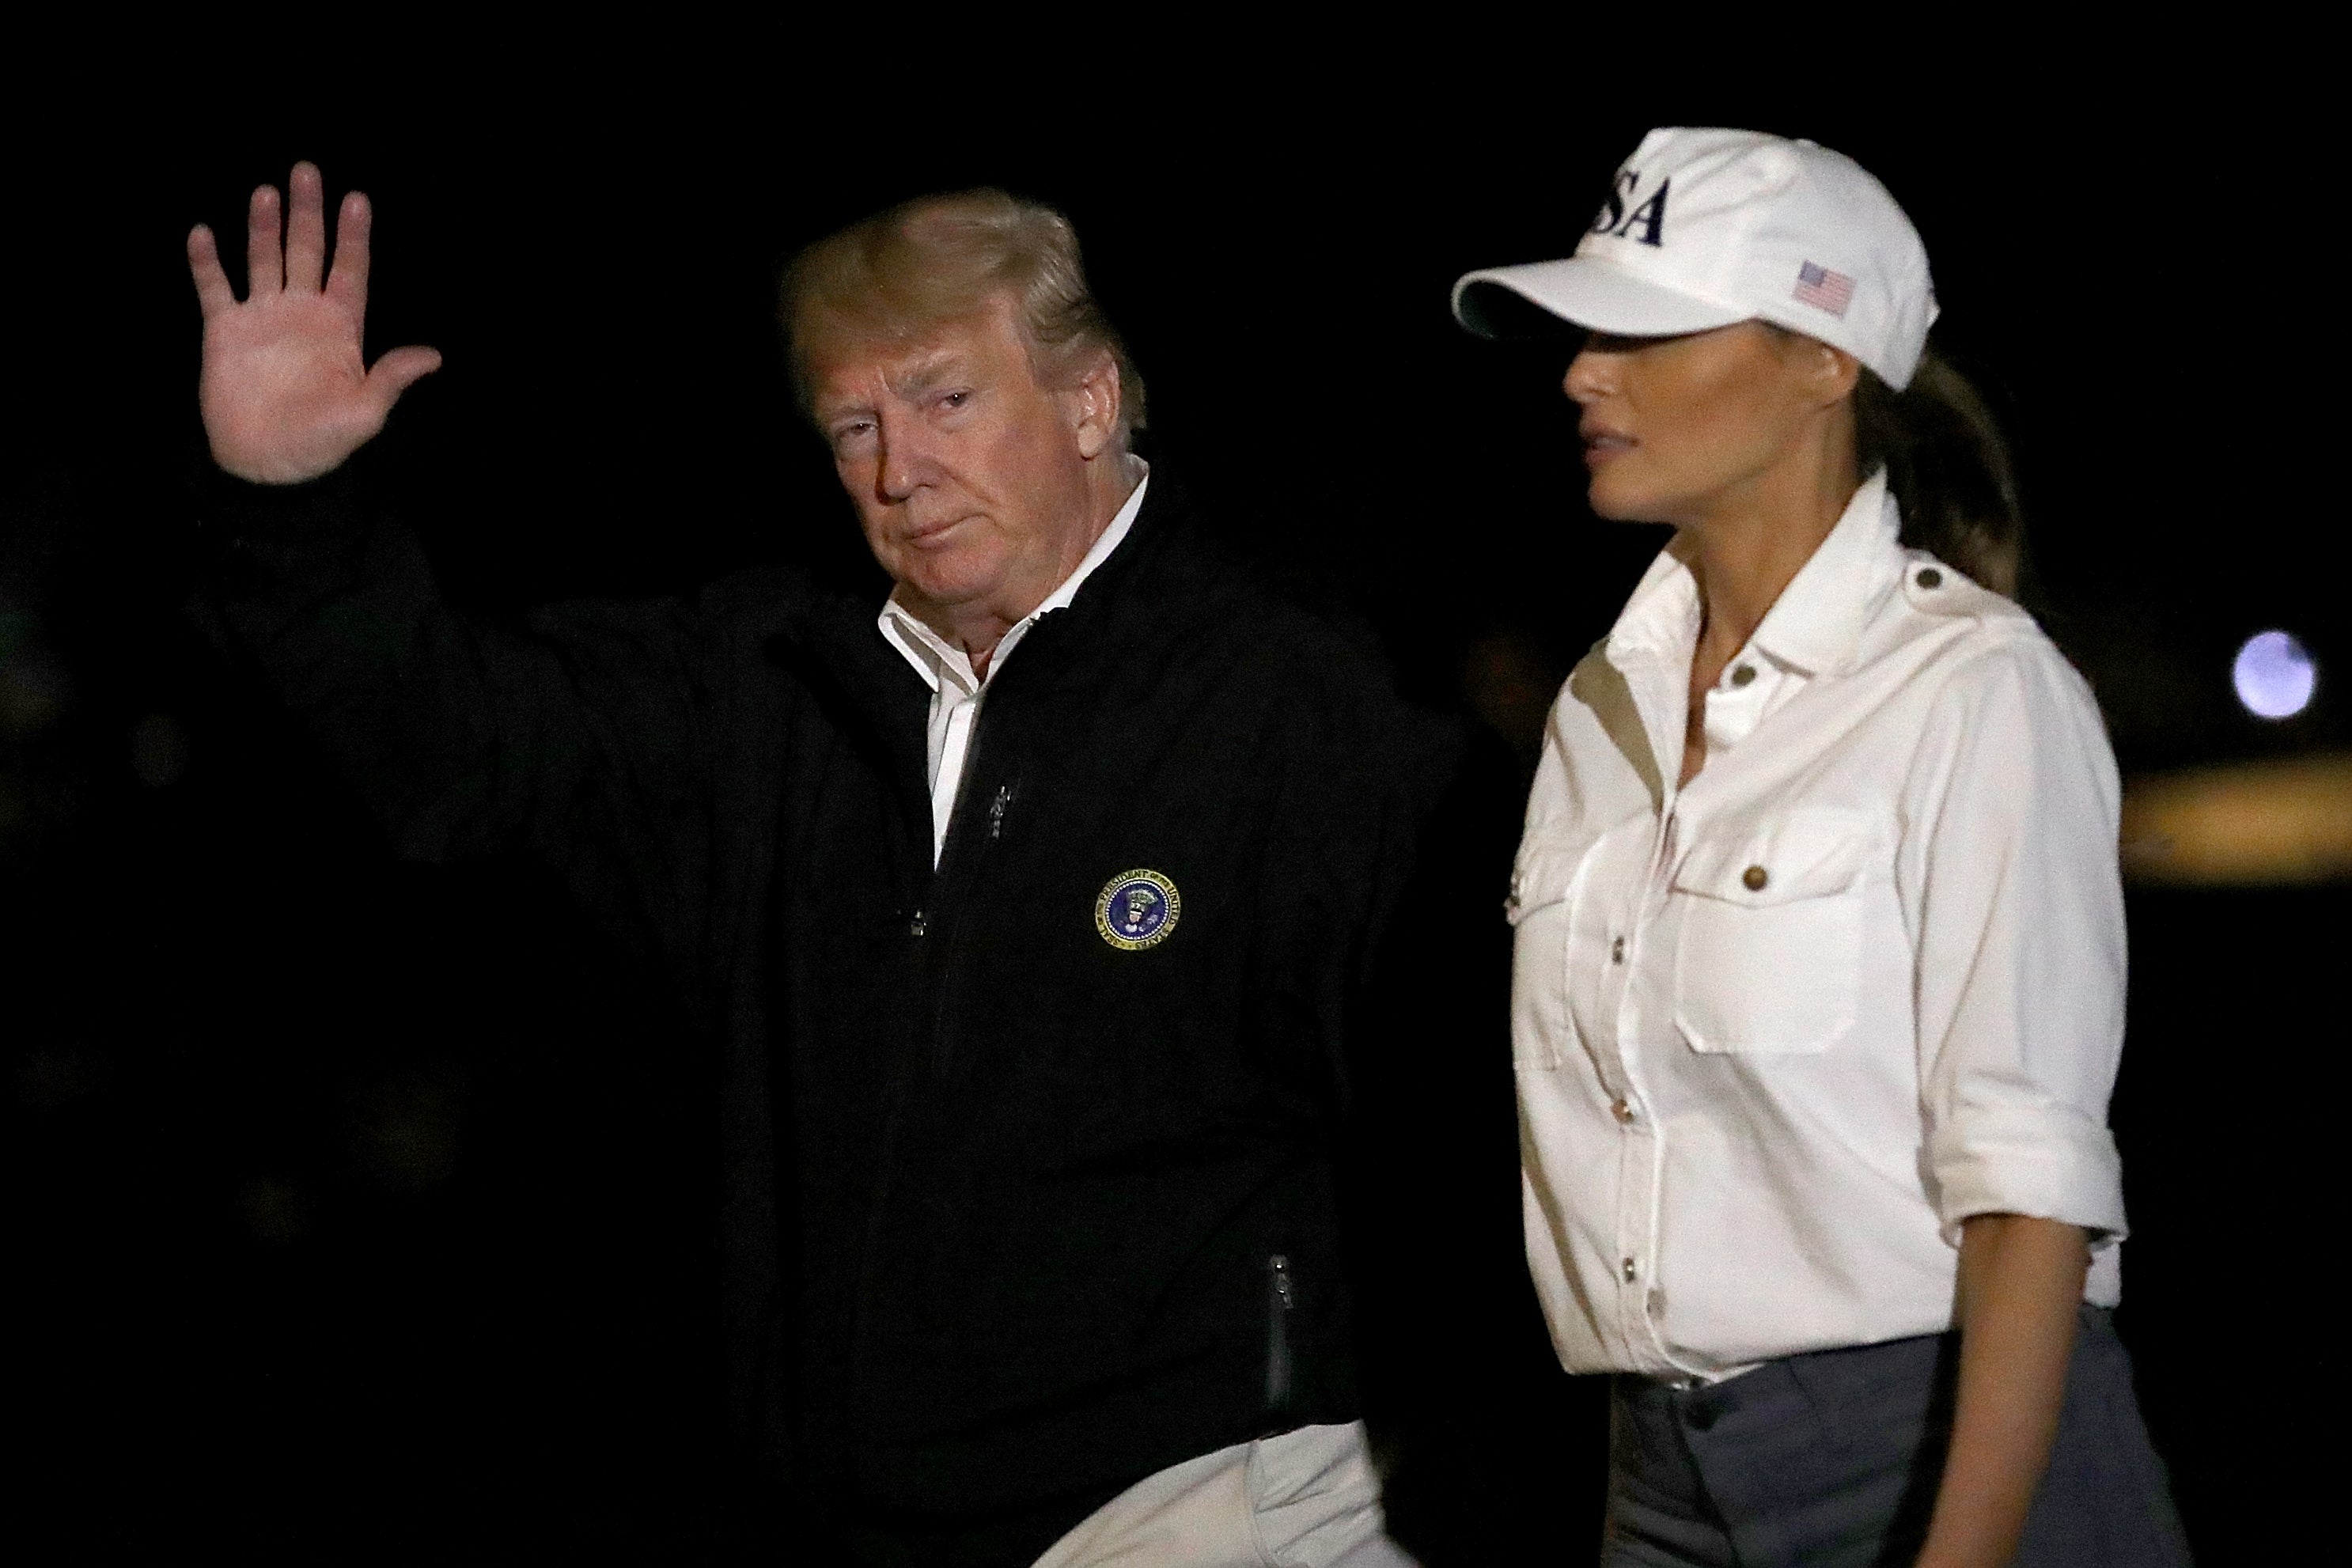 Trump, wearing a fleece, waves to the camera while Melania walks alongside him in a baseball cap.